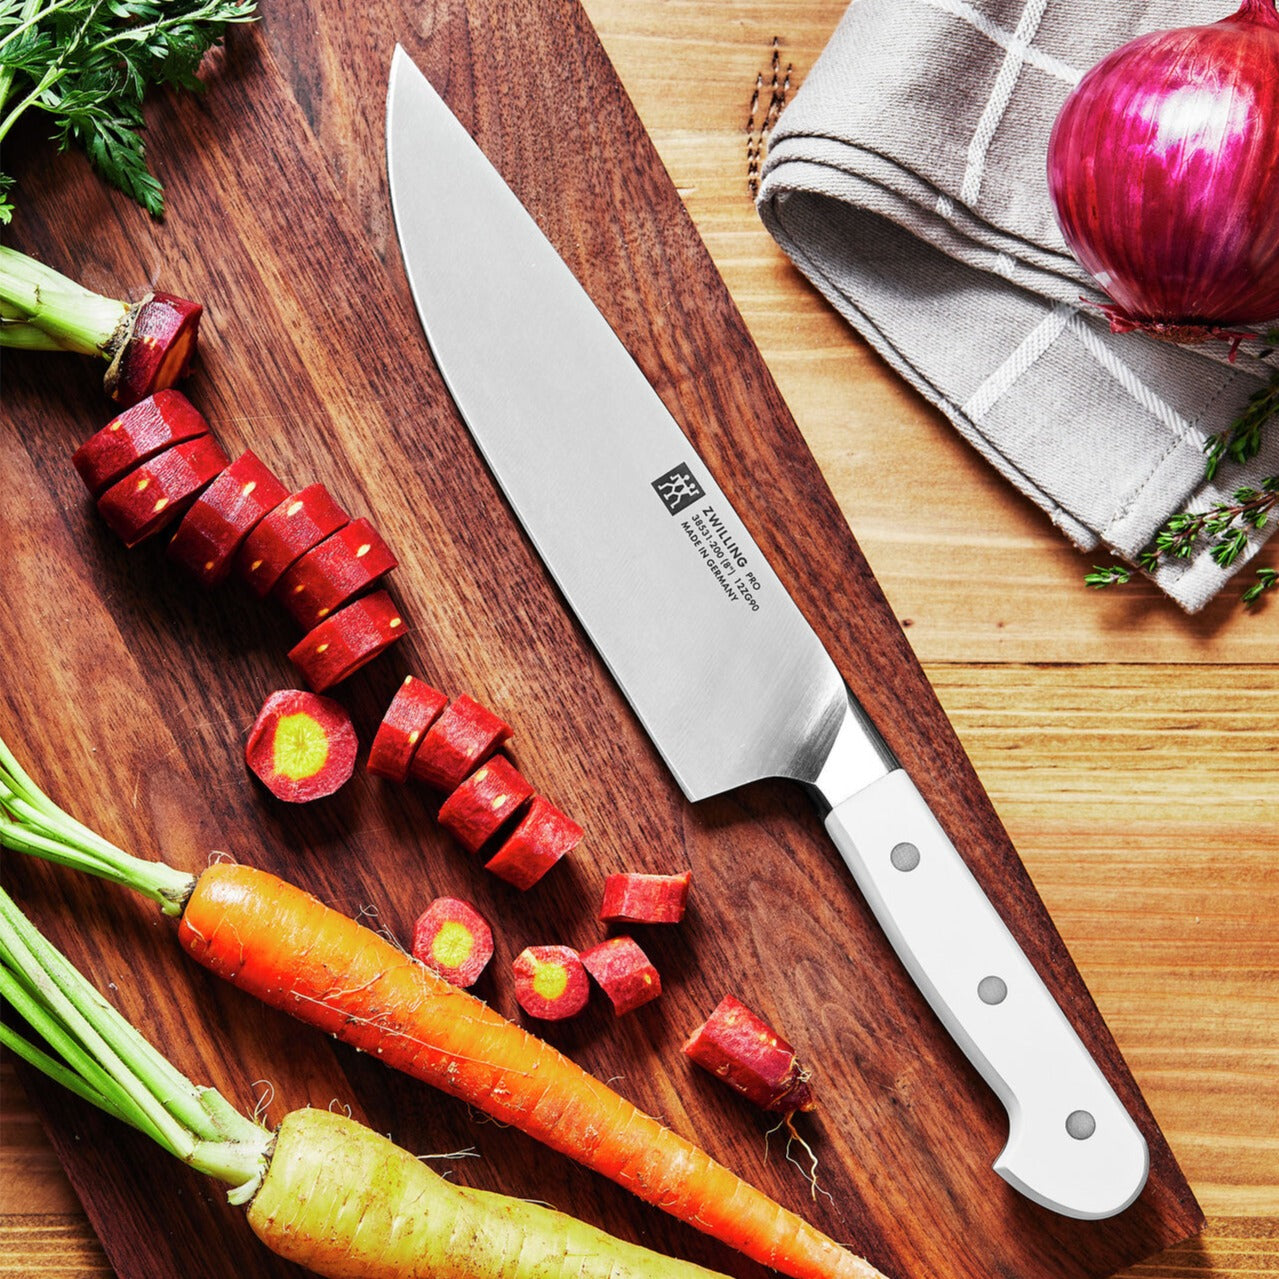  ZWILLING Pro Le Blanc 4-pc Steak Knife Set: Home & Kitchen